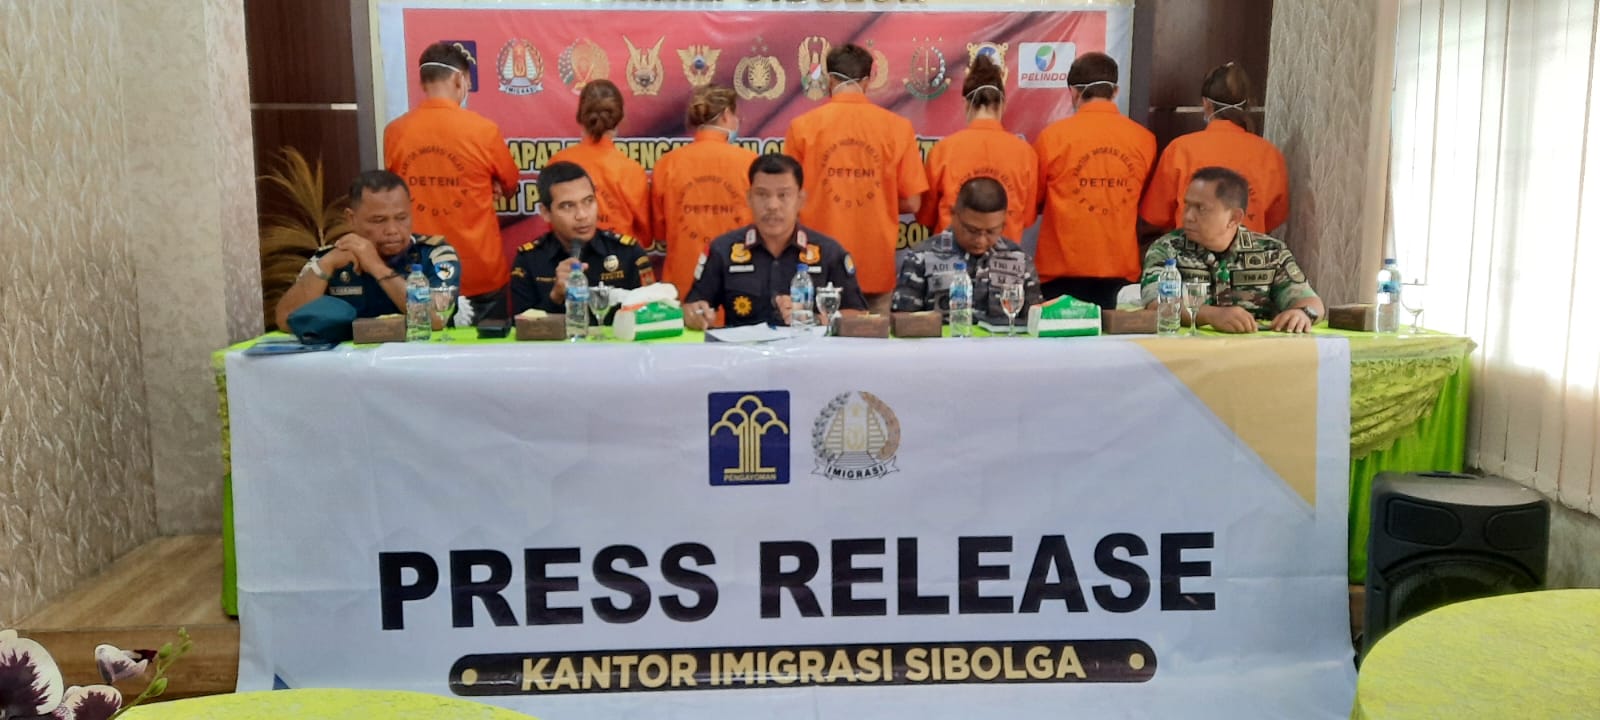 Imigrasi Sibolga dan TIMPORA Amankan 7 WNA | Tak Sanggup Bayar Denda, Akan Segera Dideportasi